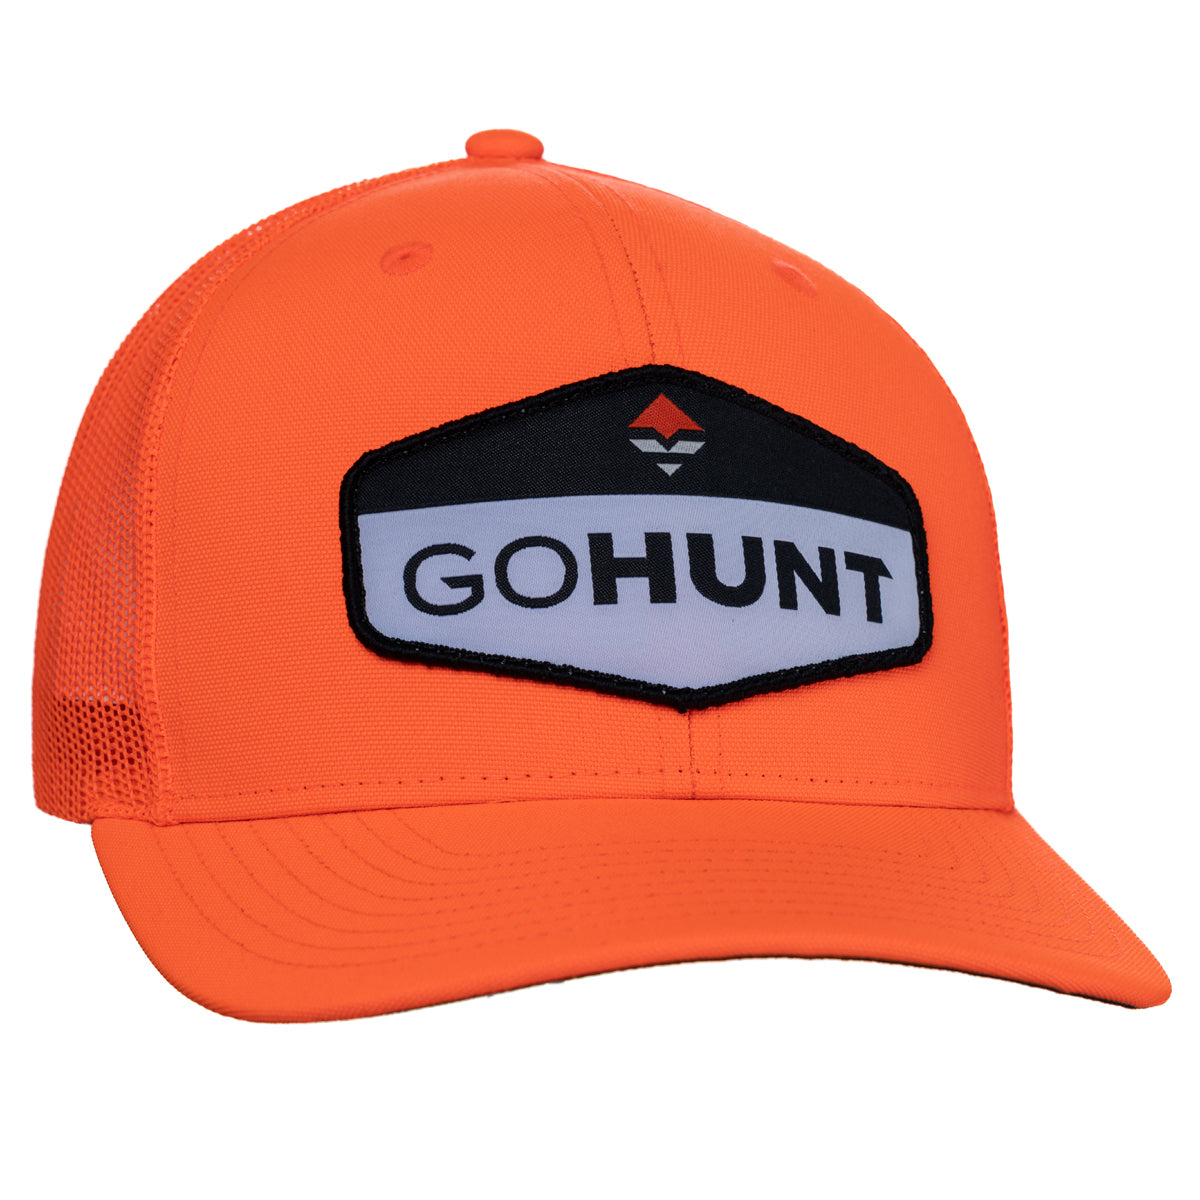 GOHUNT Trail Blaze in Blaze Orange by GOHUNT | GOHUNT - GOHUNT Shop